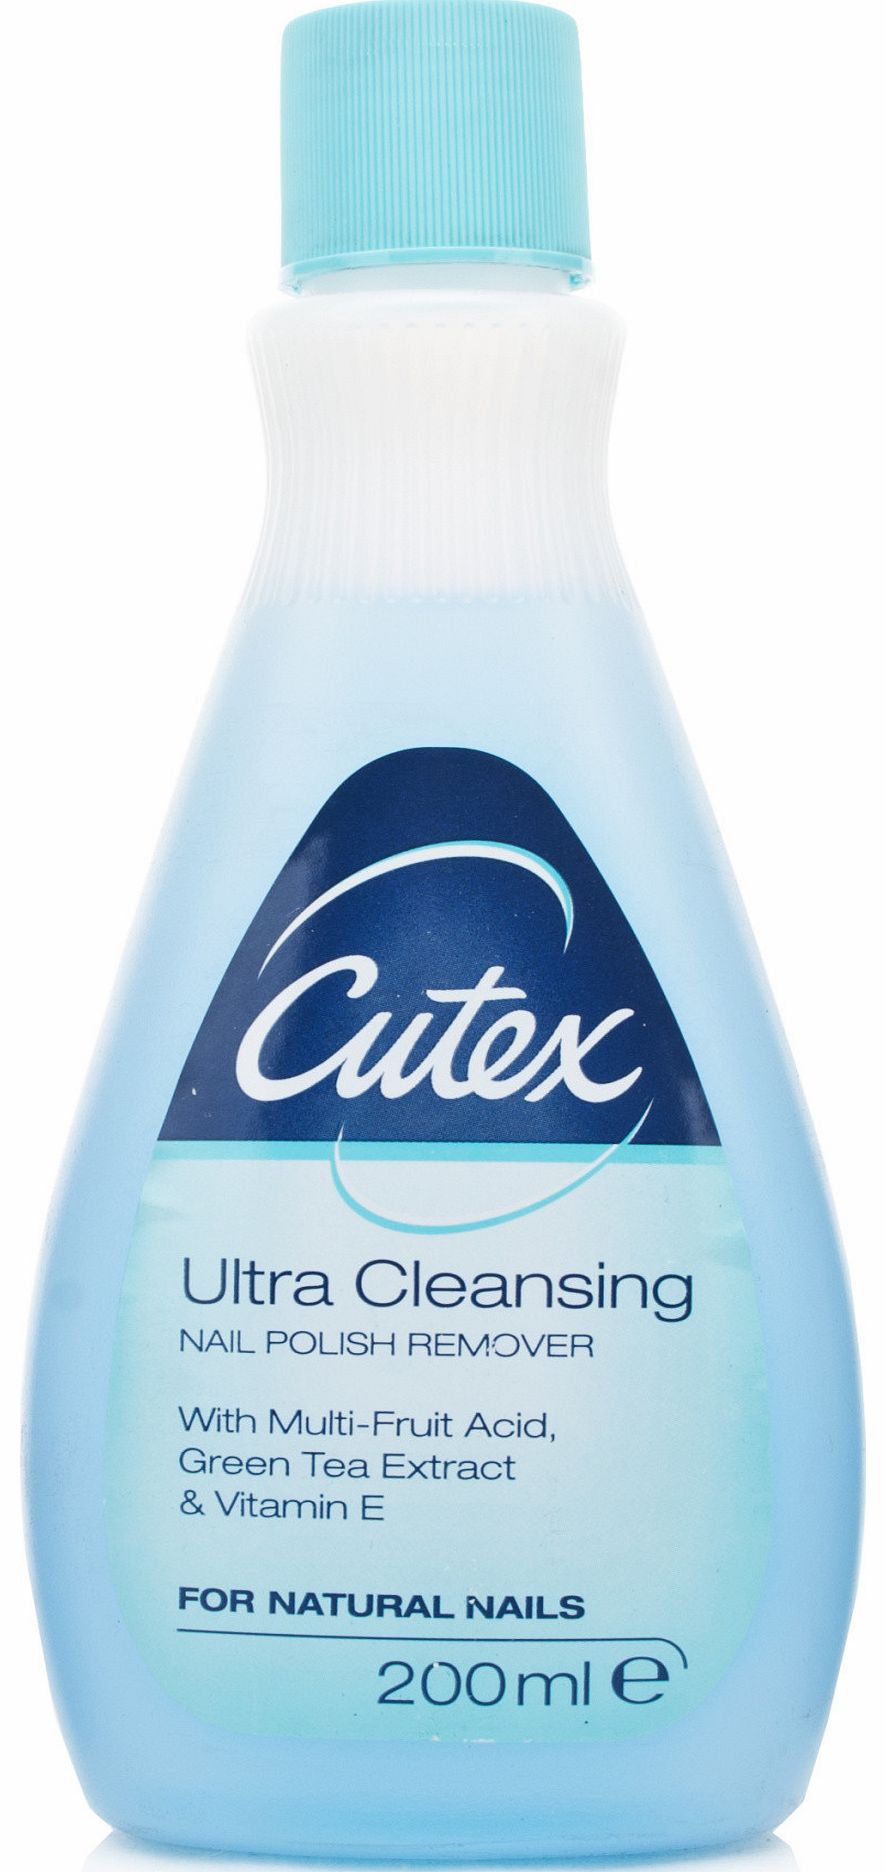 Cutex Ultra Cleansing Nail Polish Remover